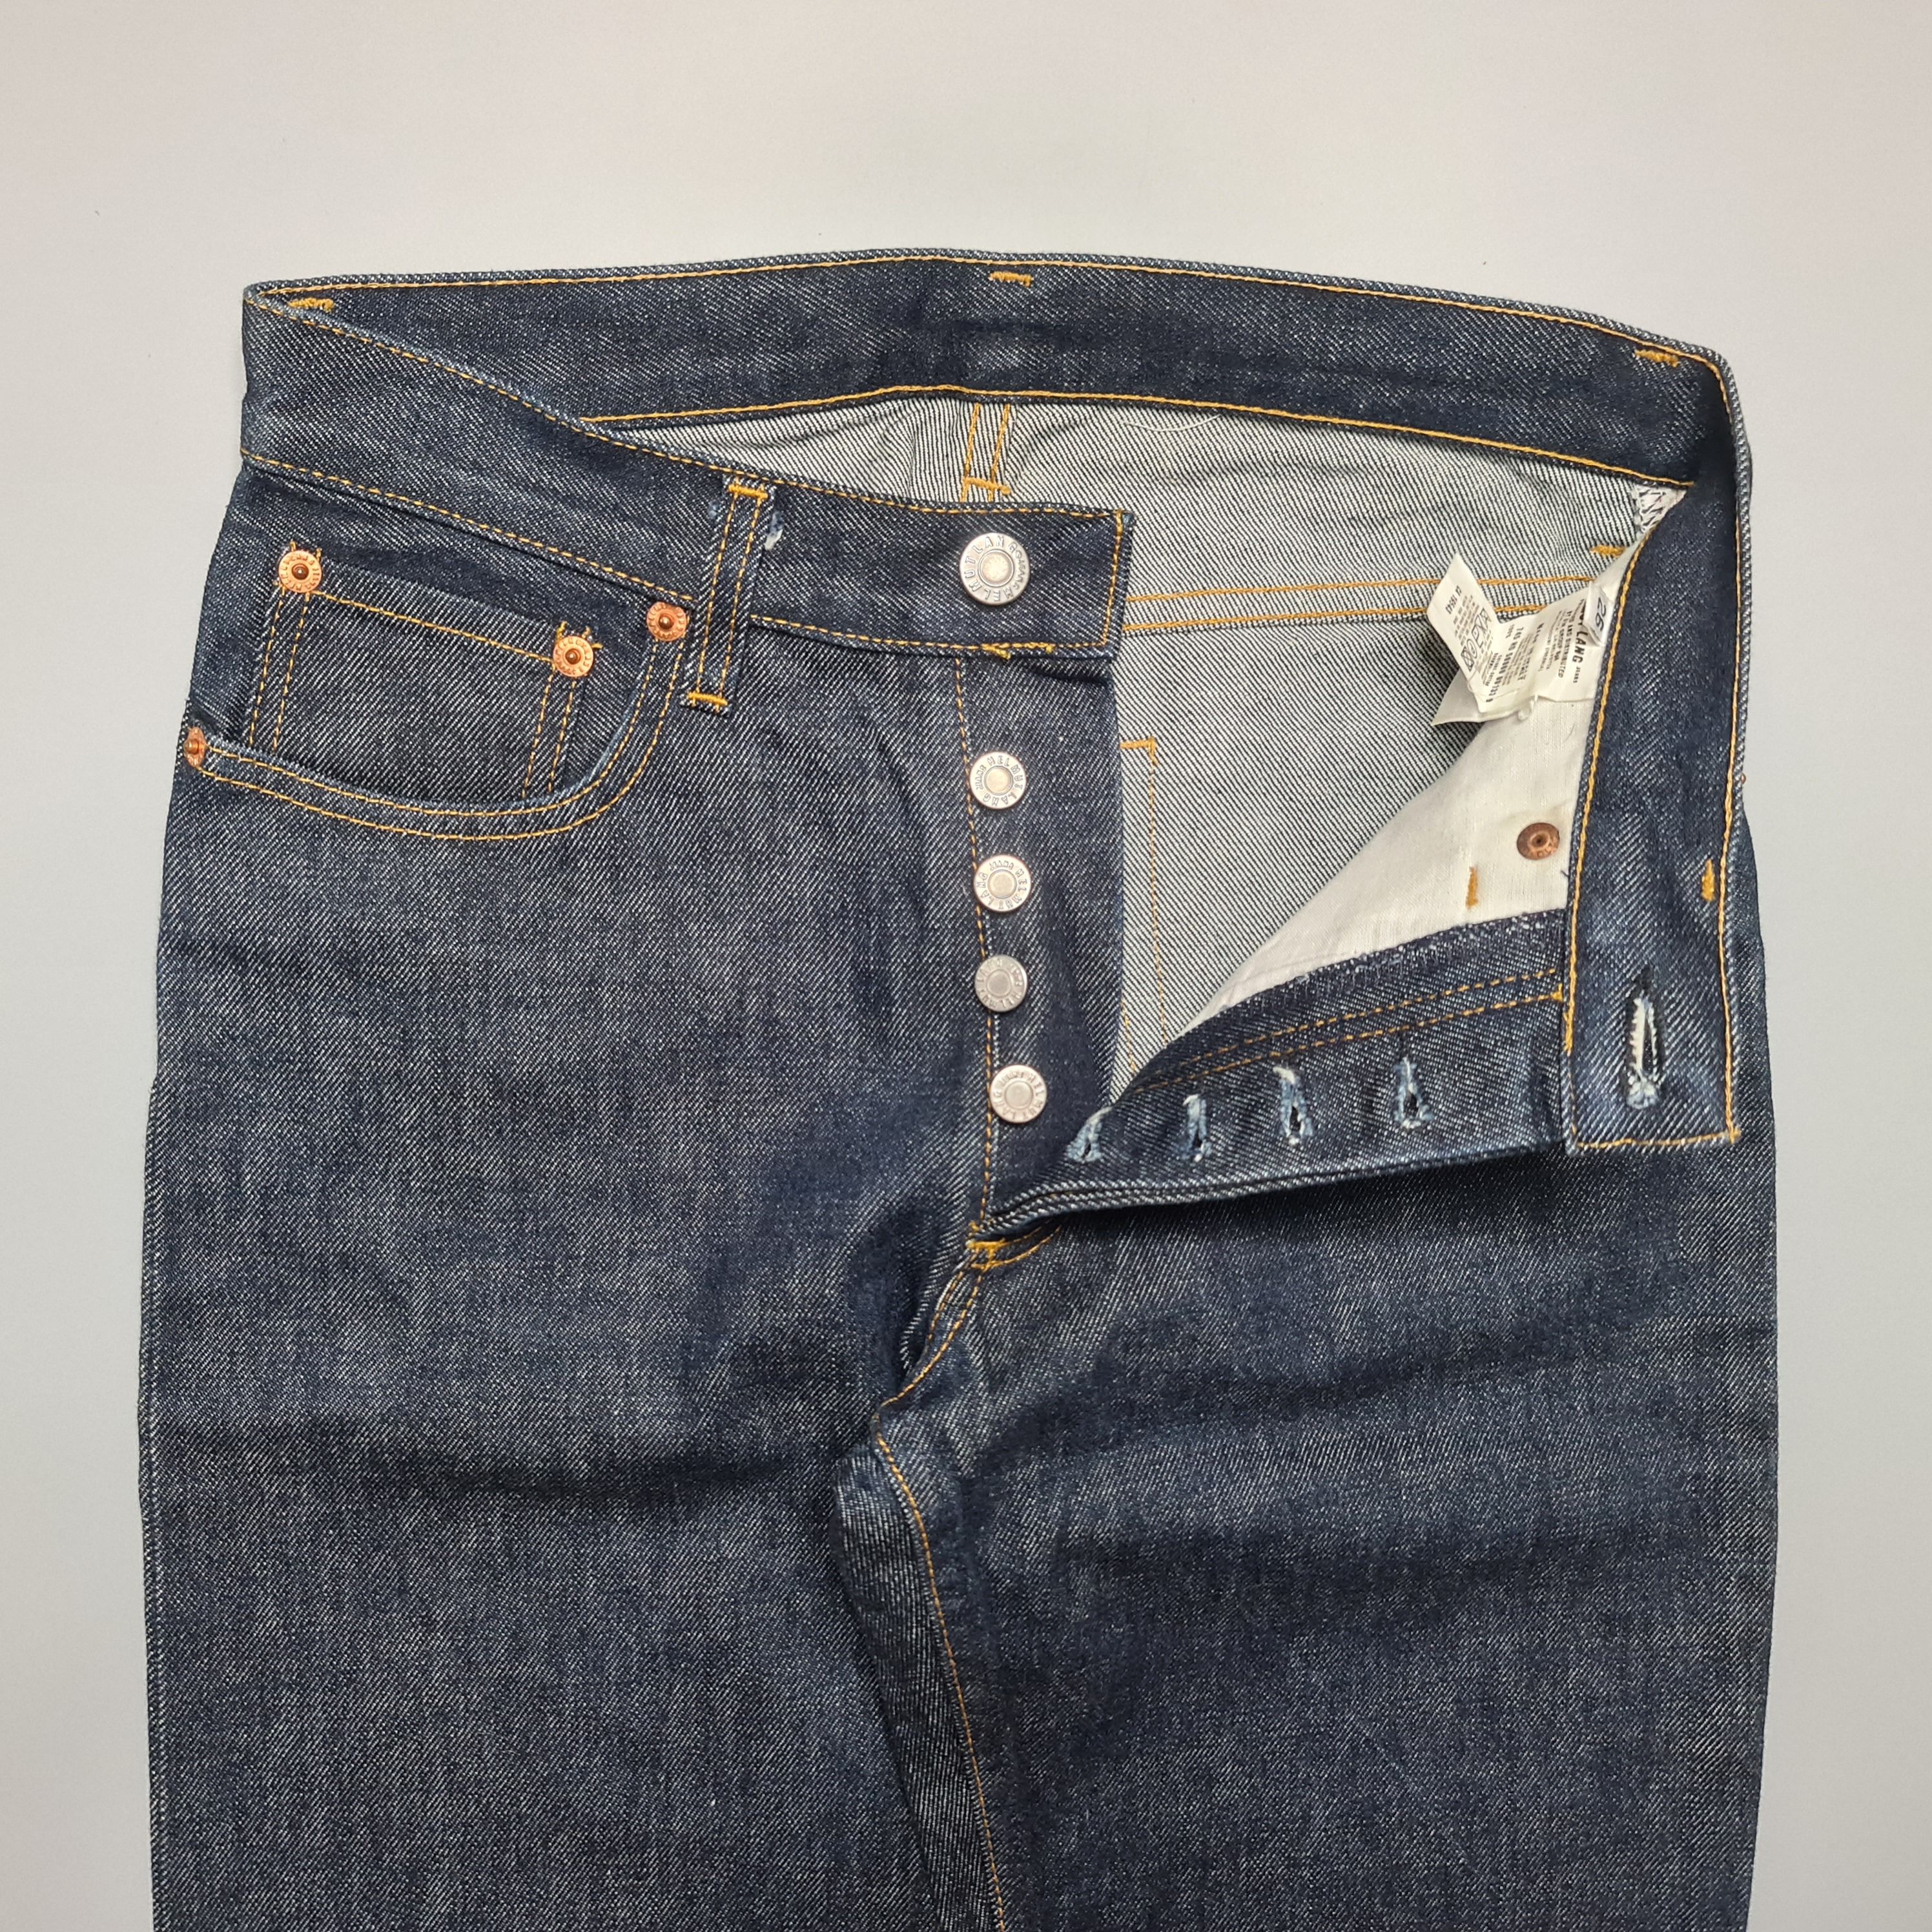 Helmut Lang - SS98 Classic 5-Pocket Jeans - 3